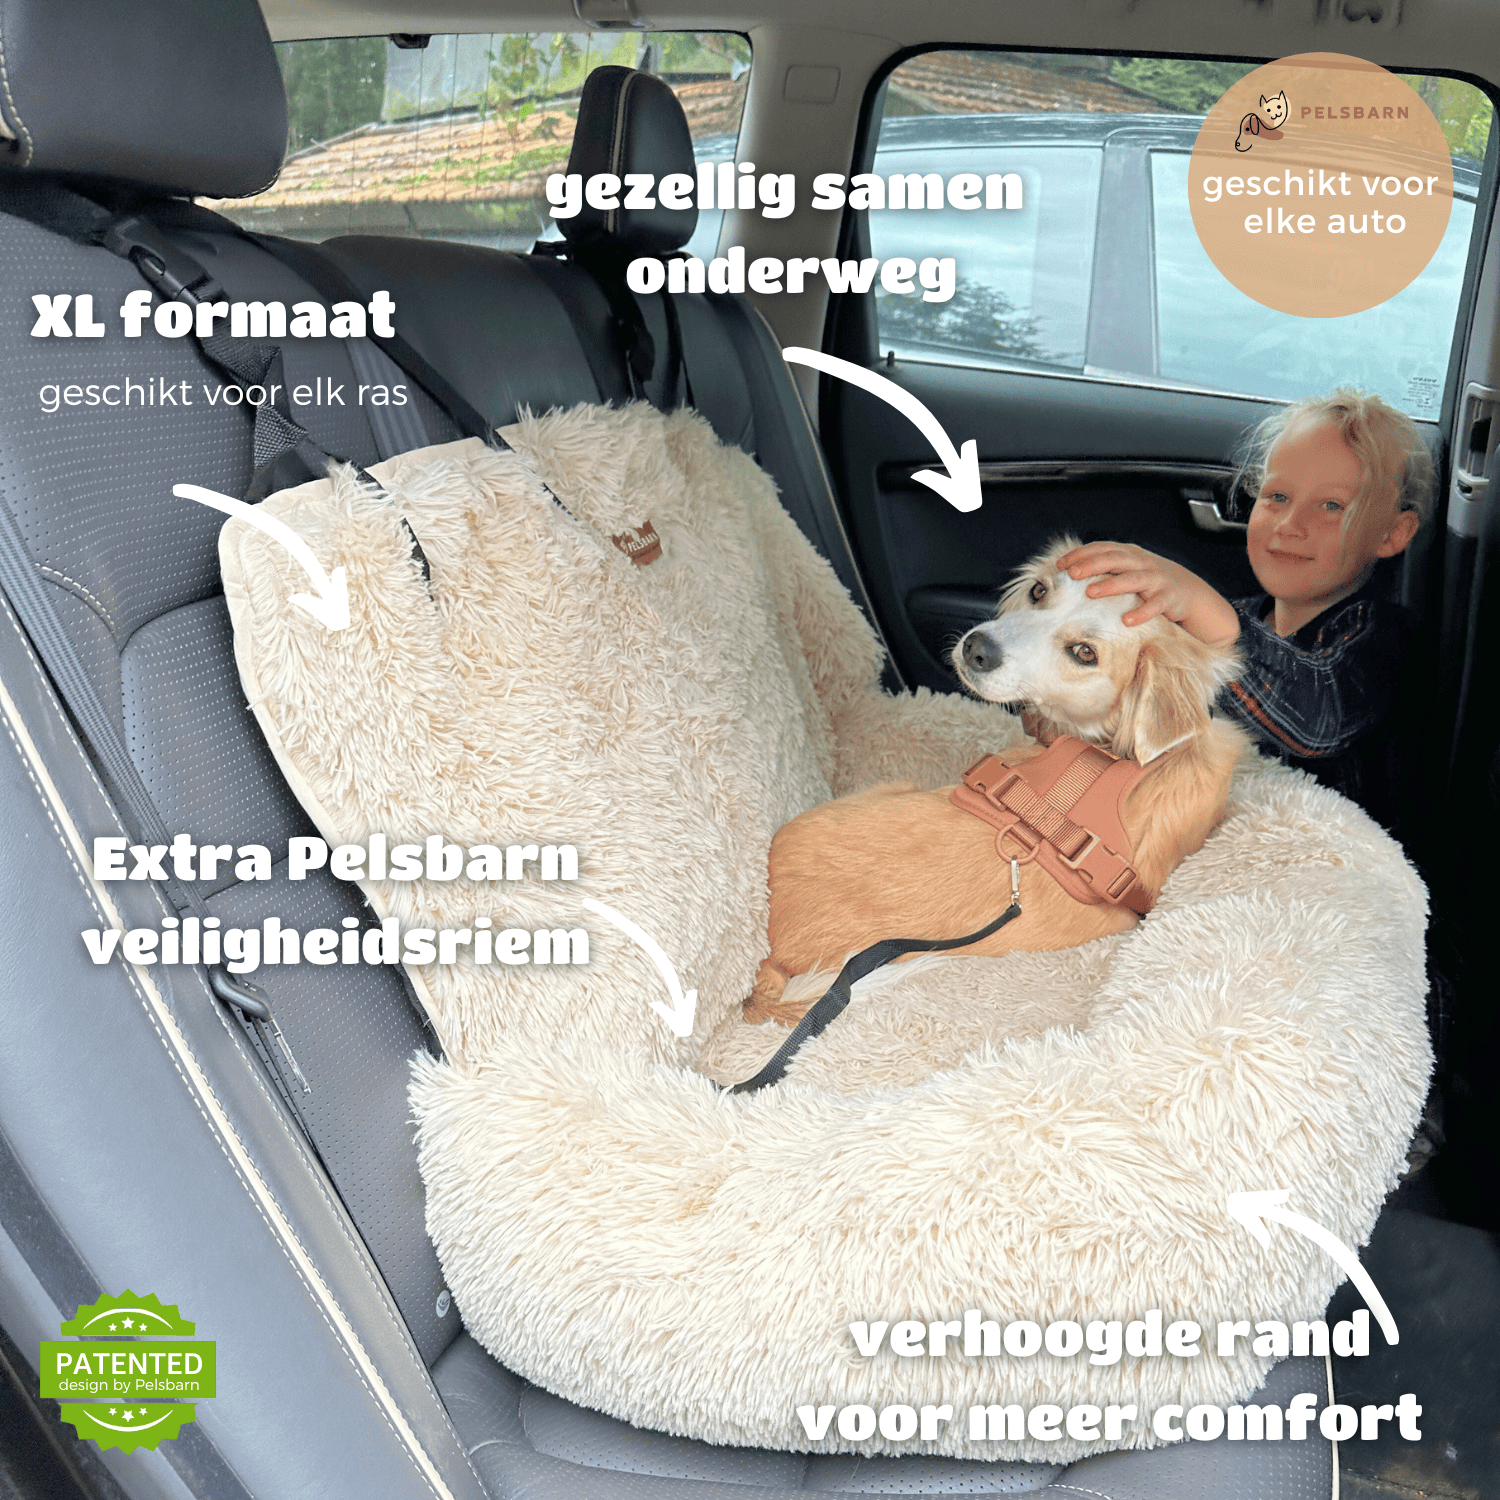 Pelsbarn car dog bed (2-in-1)